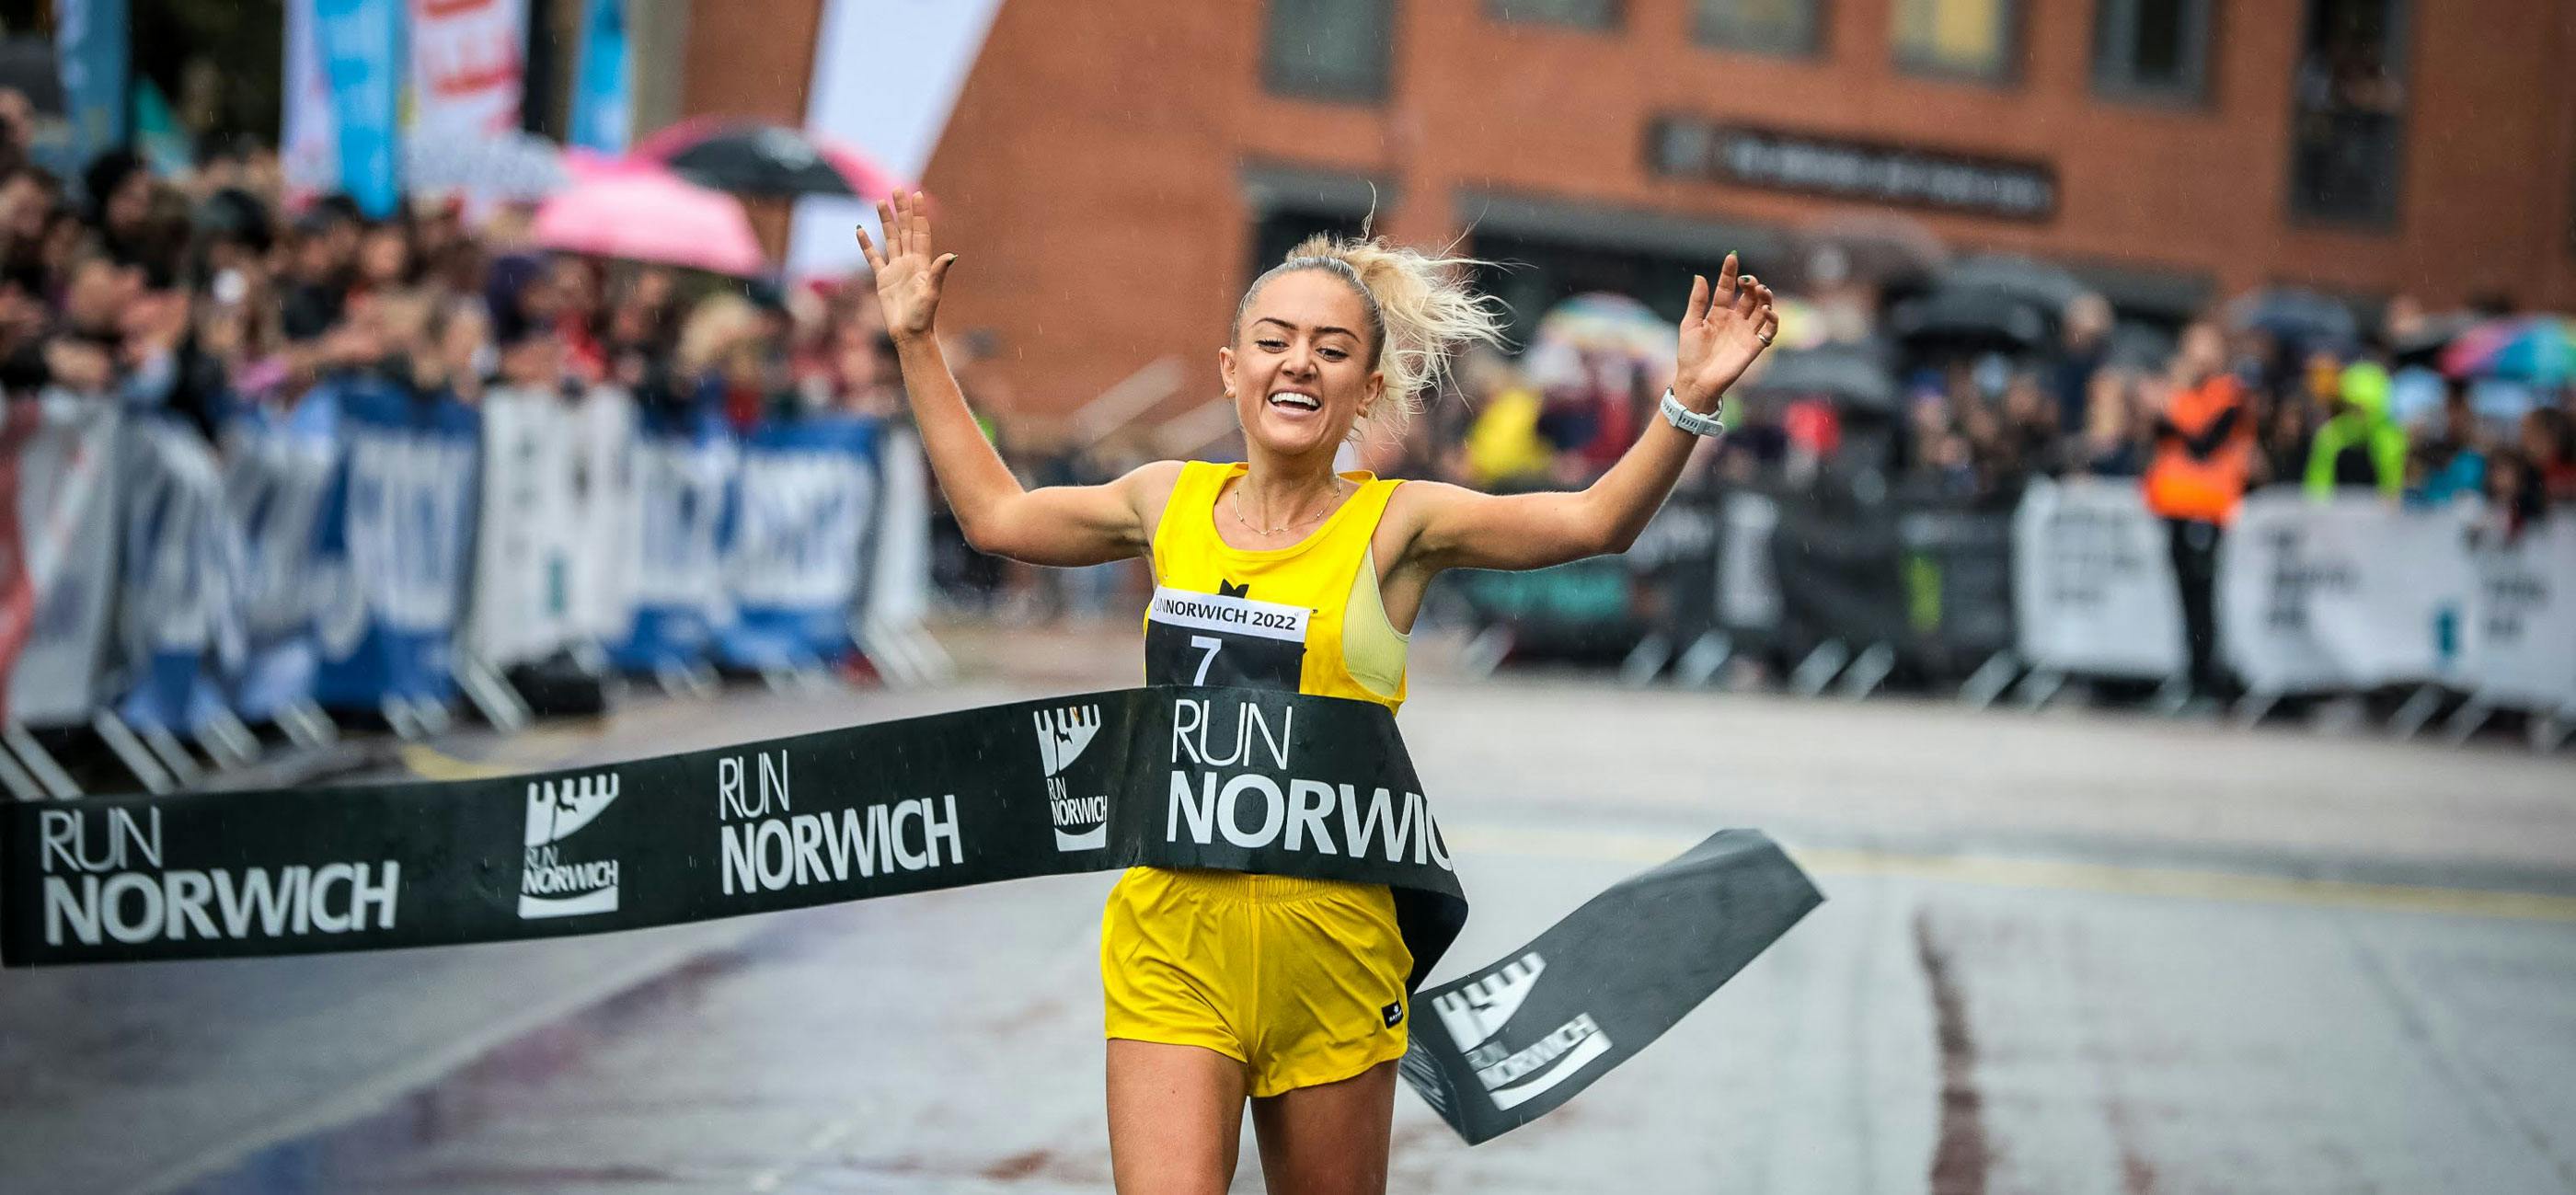 A woman in a yellow runs through the Run Norwich finish line ribbon smiling.